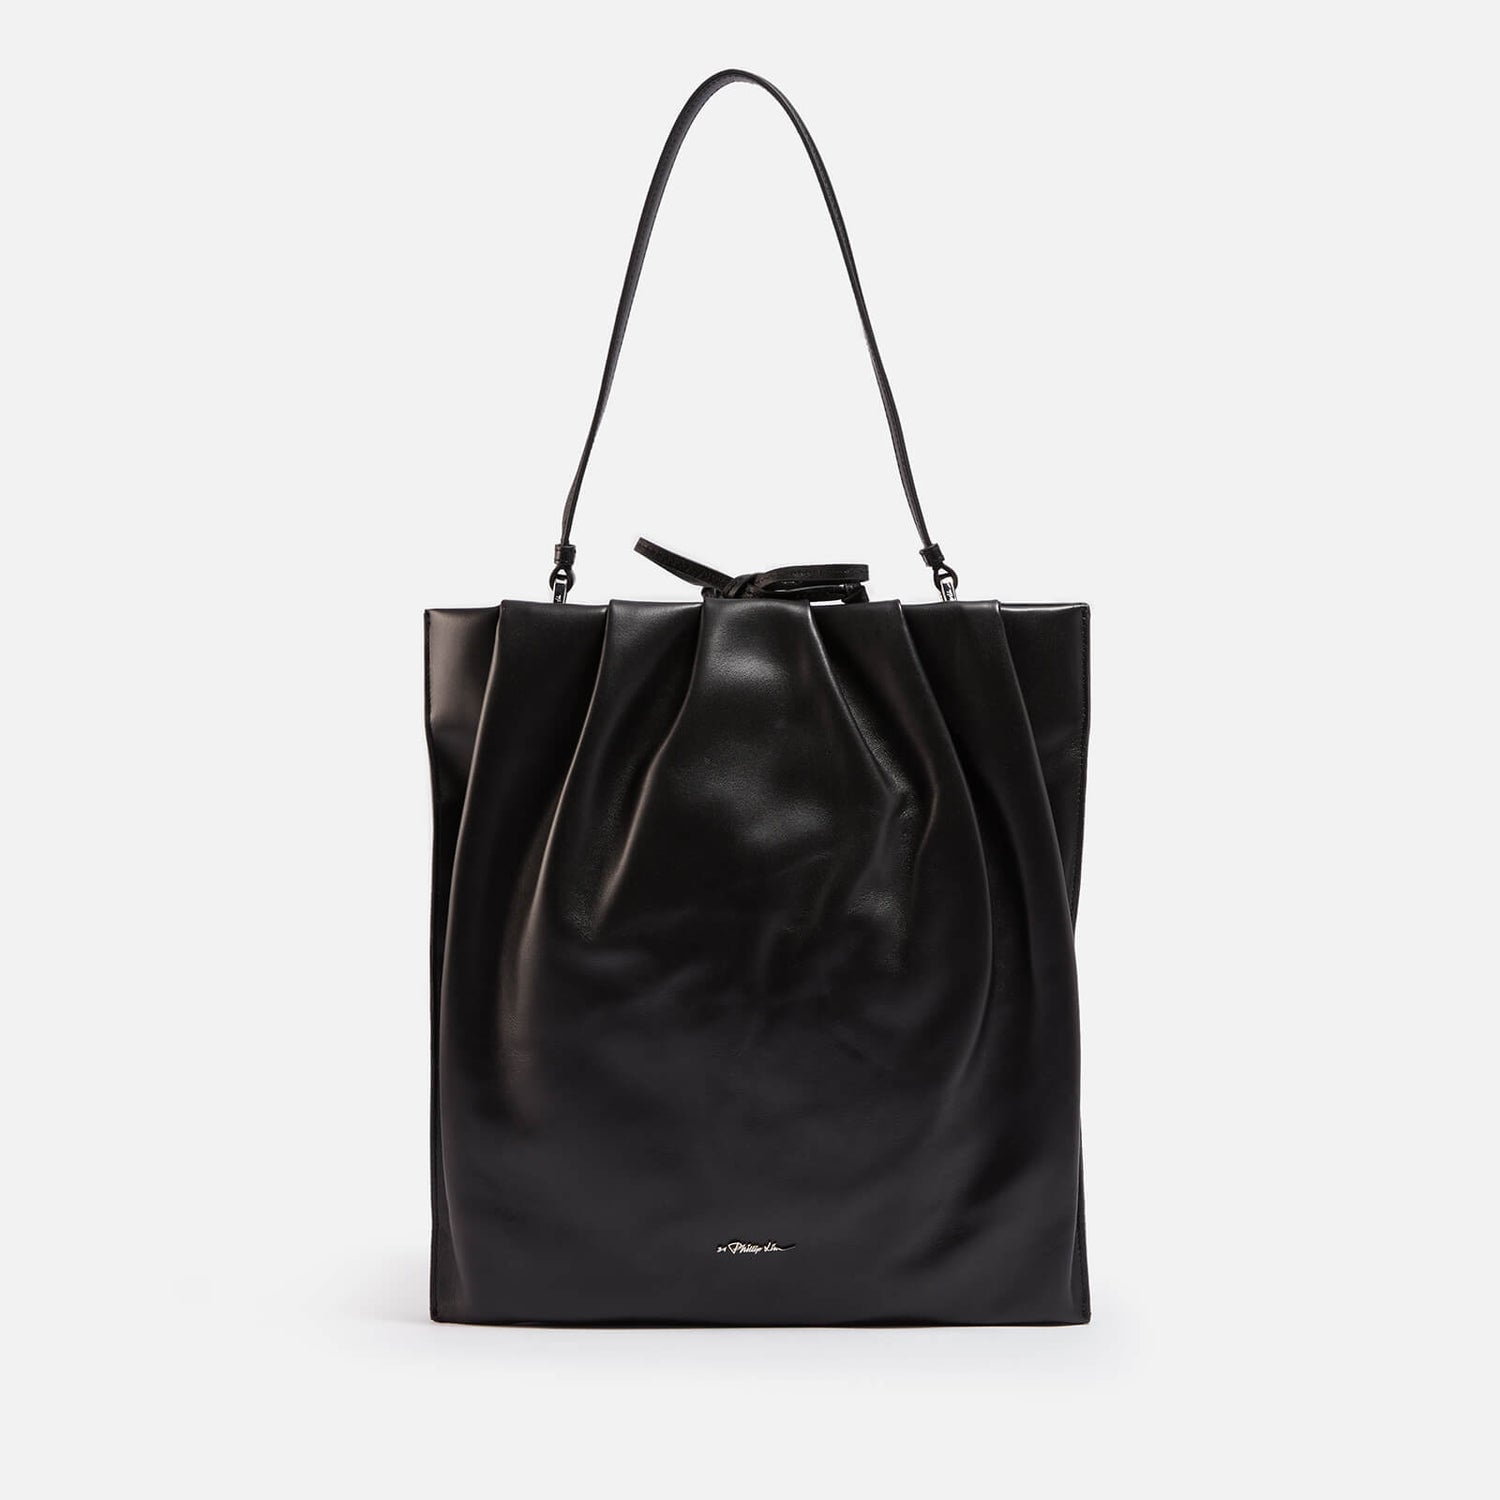 3.1 Philip Lim Women's Blossom Tote Bag - Black